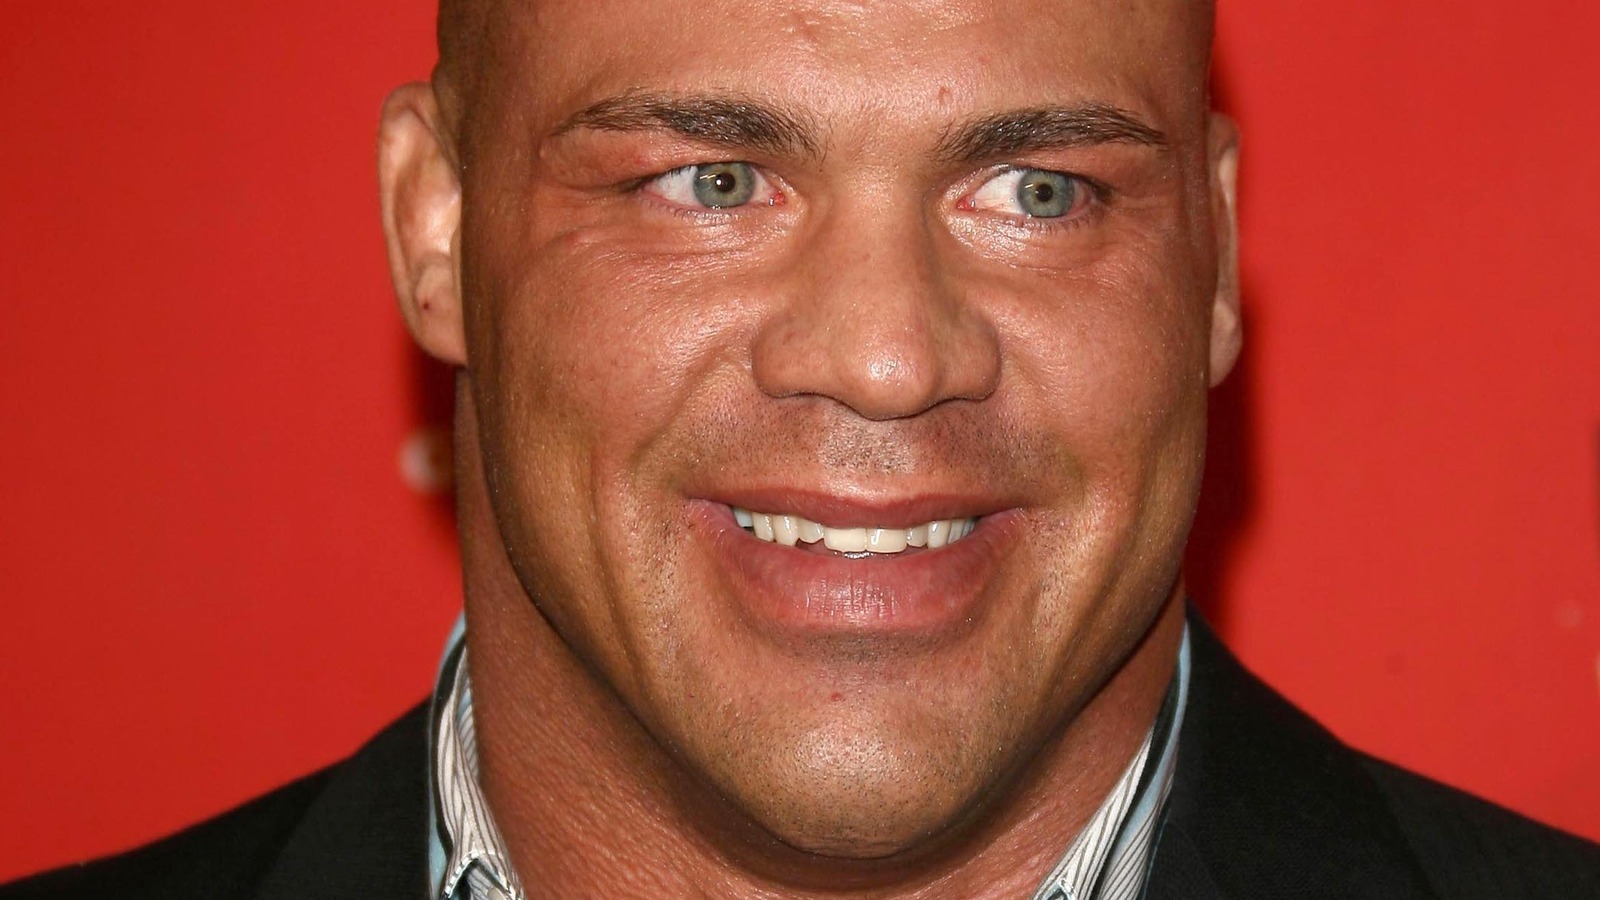 El pop más fuerte que Kurt Angle escuchó fue Steve Austin saliendo en WrestleMania 38